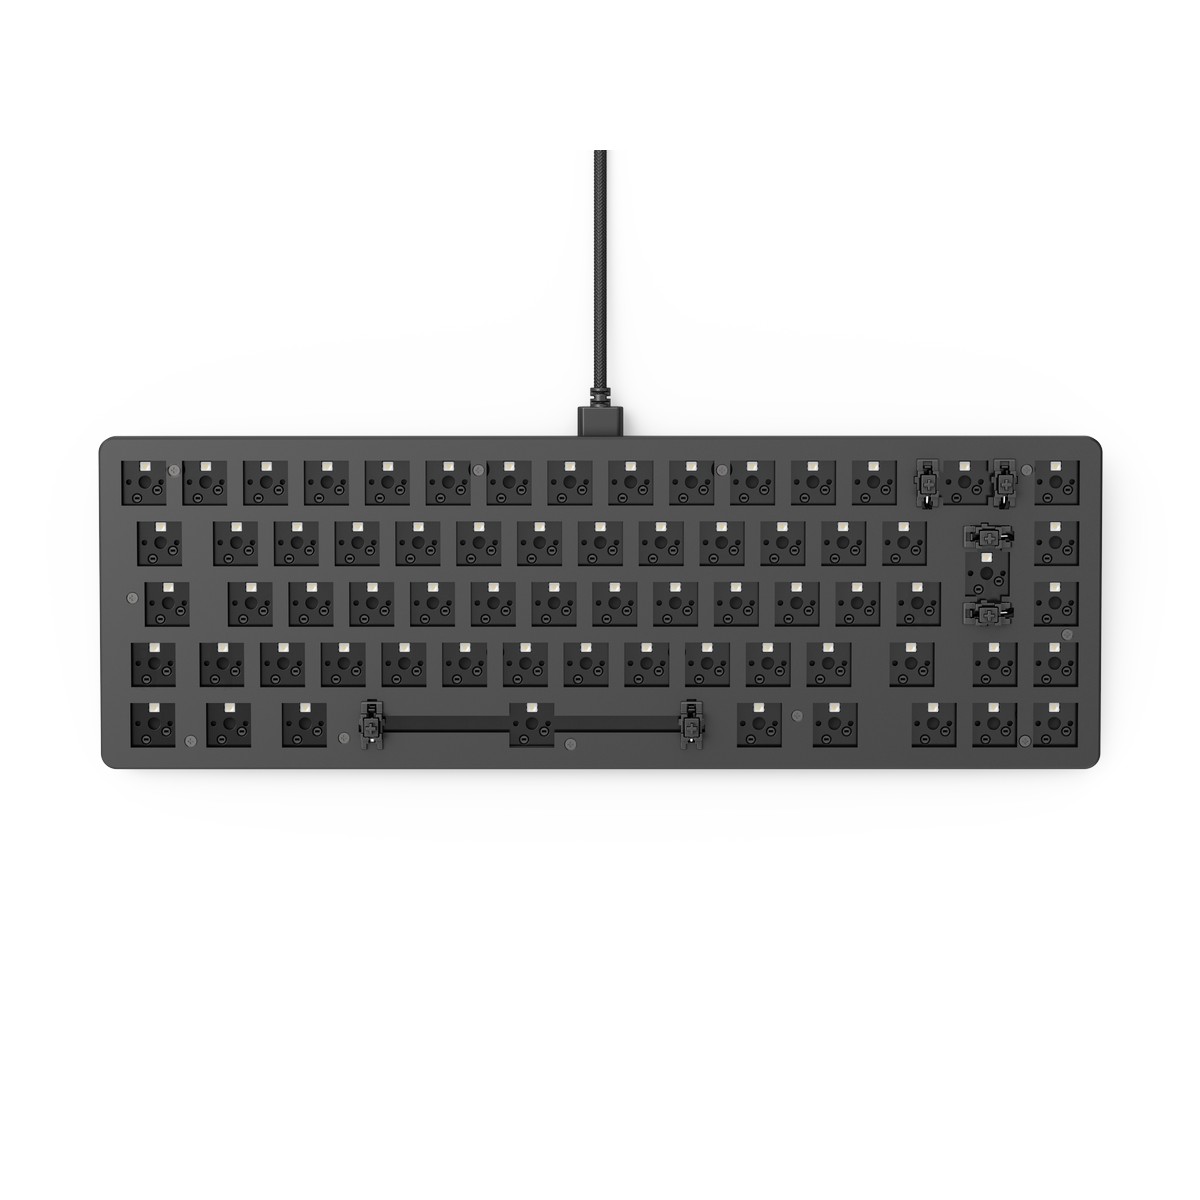 Glorious - Glorious GMMK 2 65% Keyboard Barebone ISO-Layout - Black